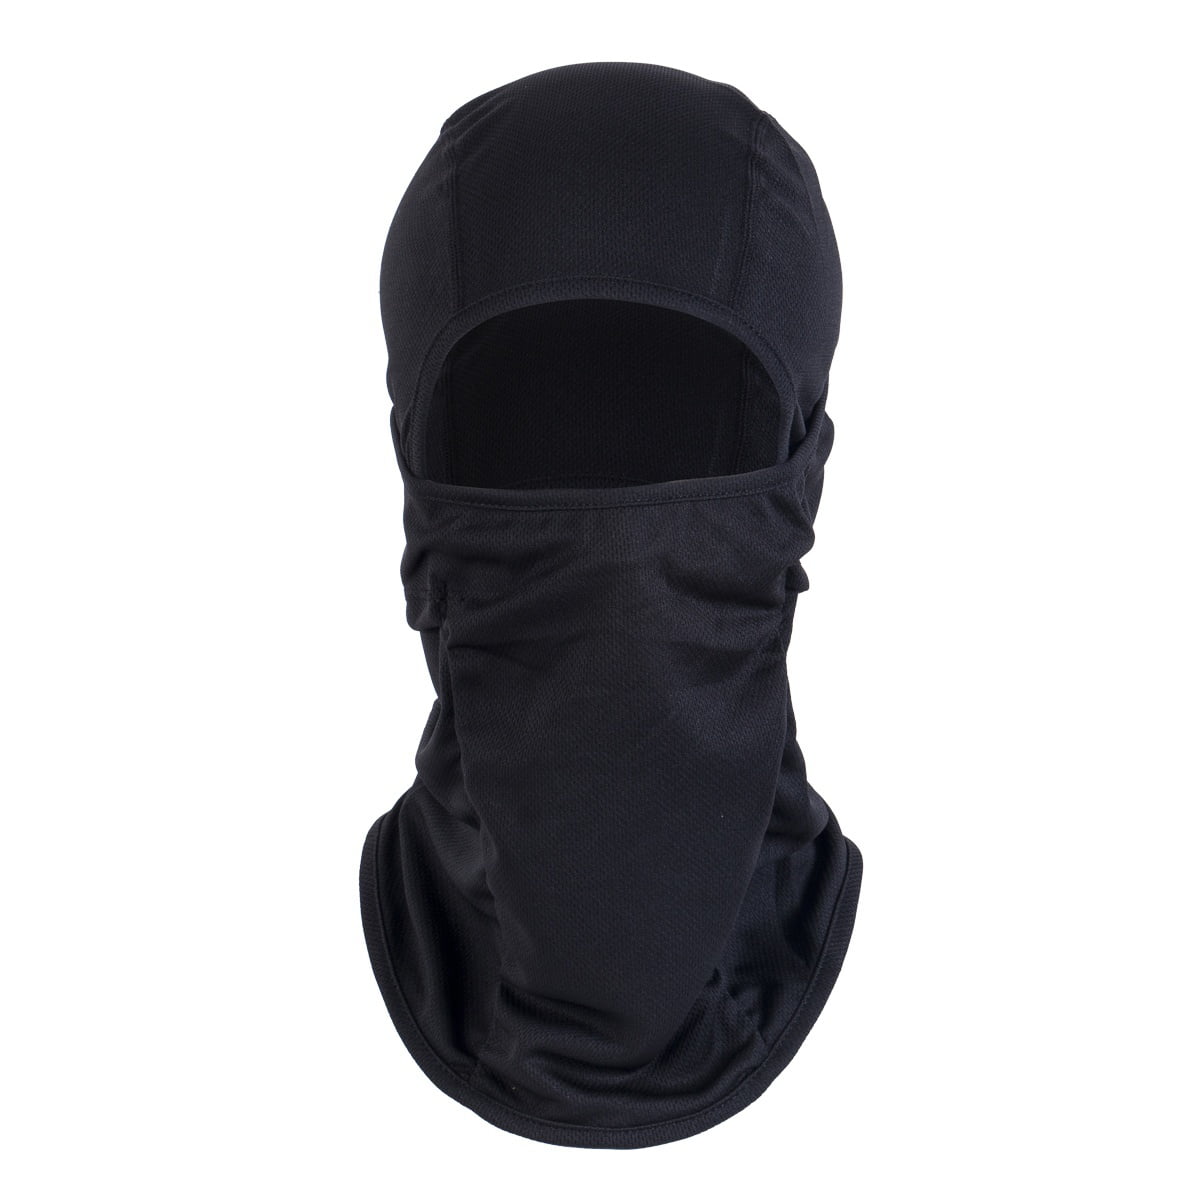 RETYLY Unisex Outdoor Motorcycle Full Face Mask Balaclava Ski Neck Protection Black